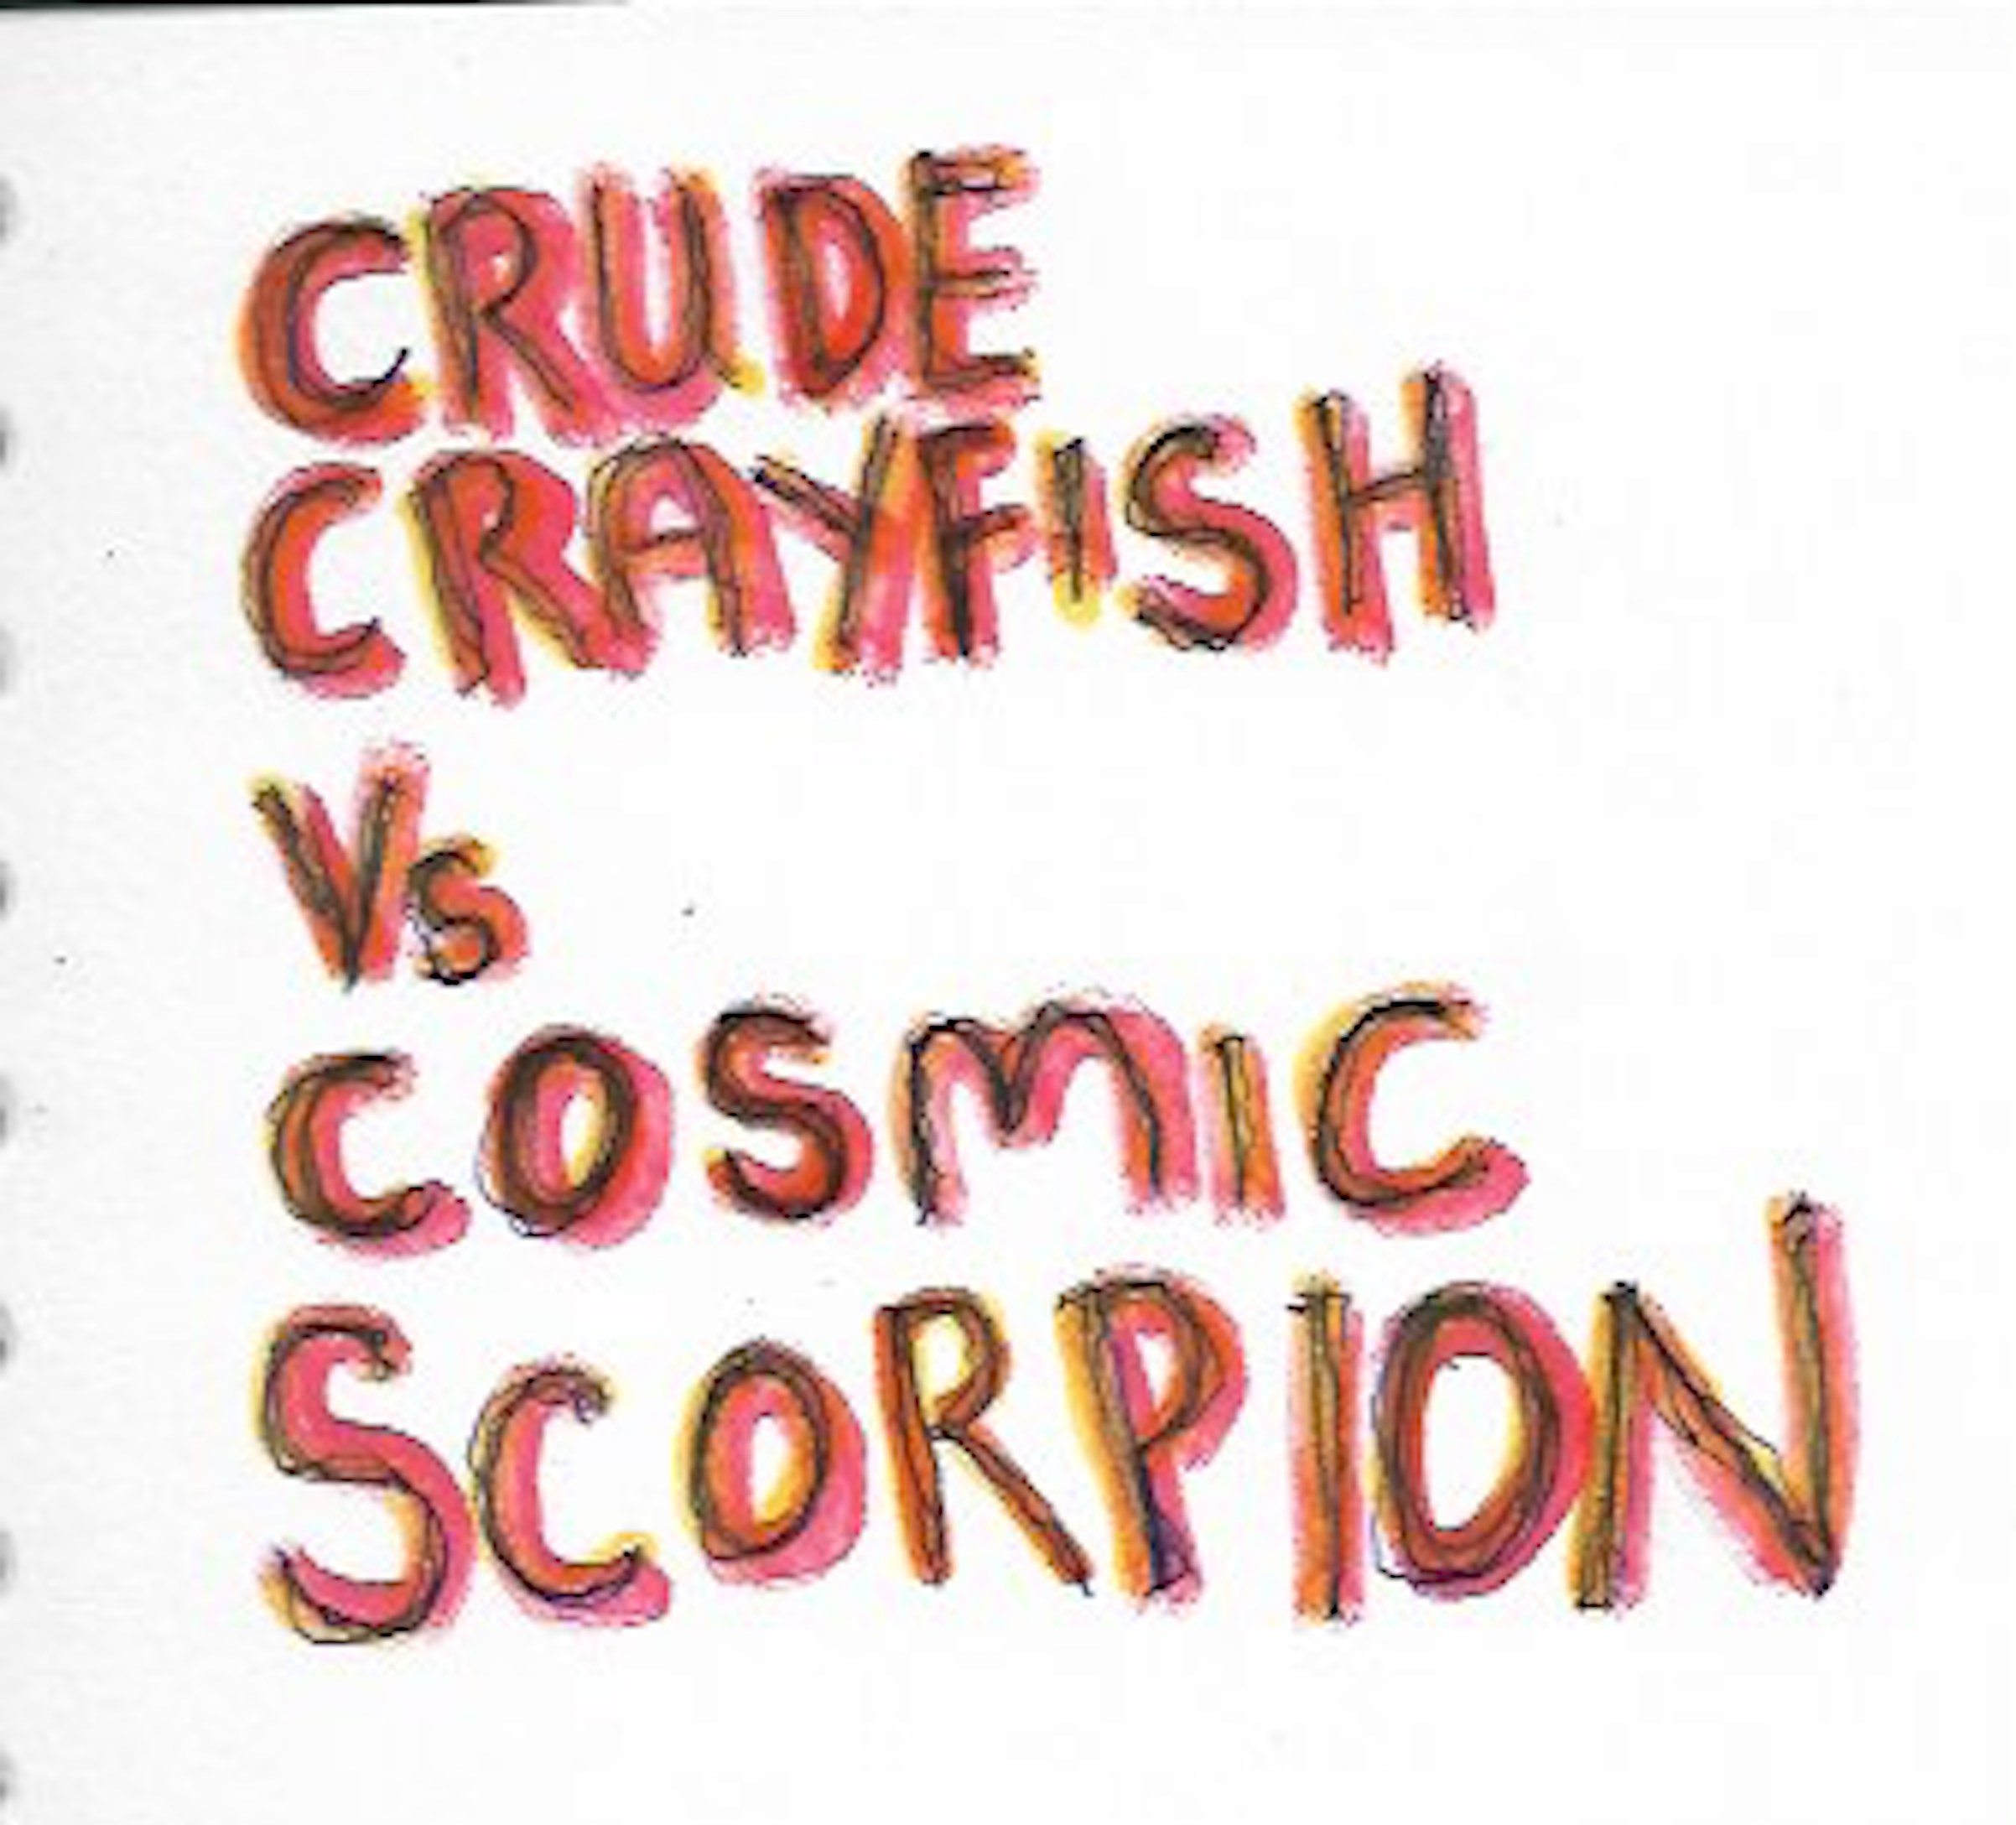 Dai Coelacanth – Crude Crayfish vs Cosmic Scorpion